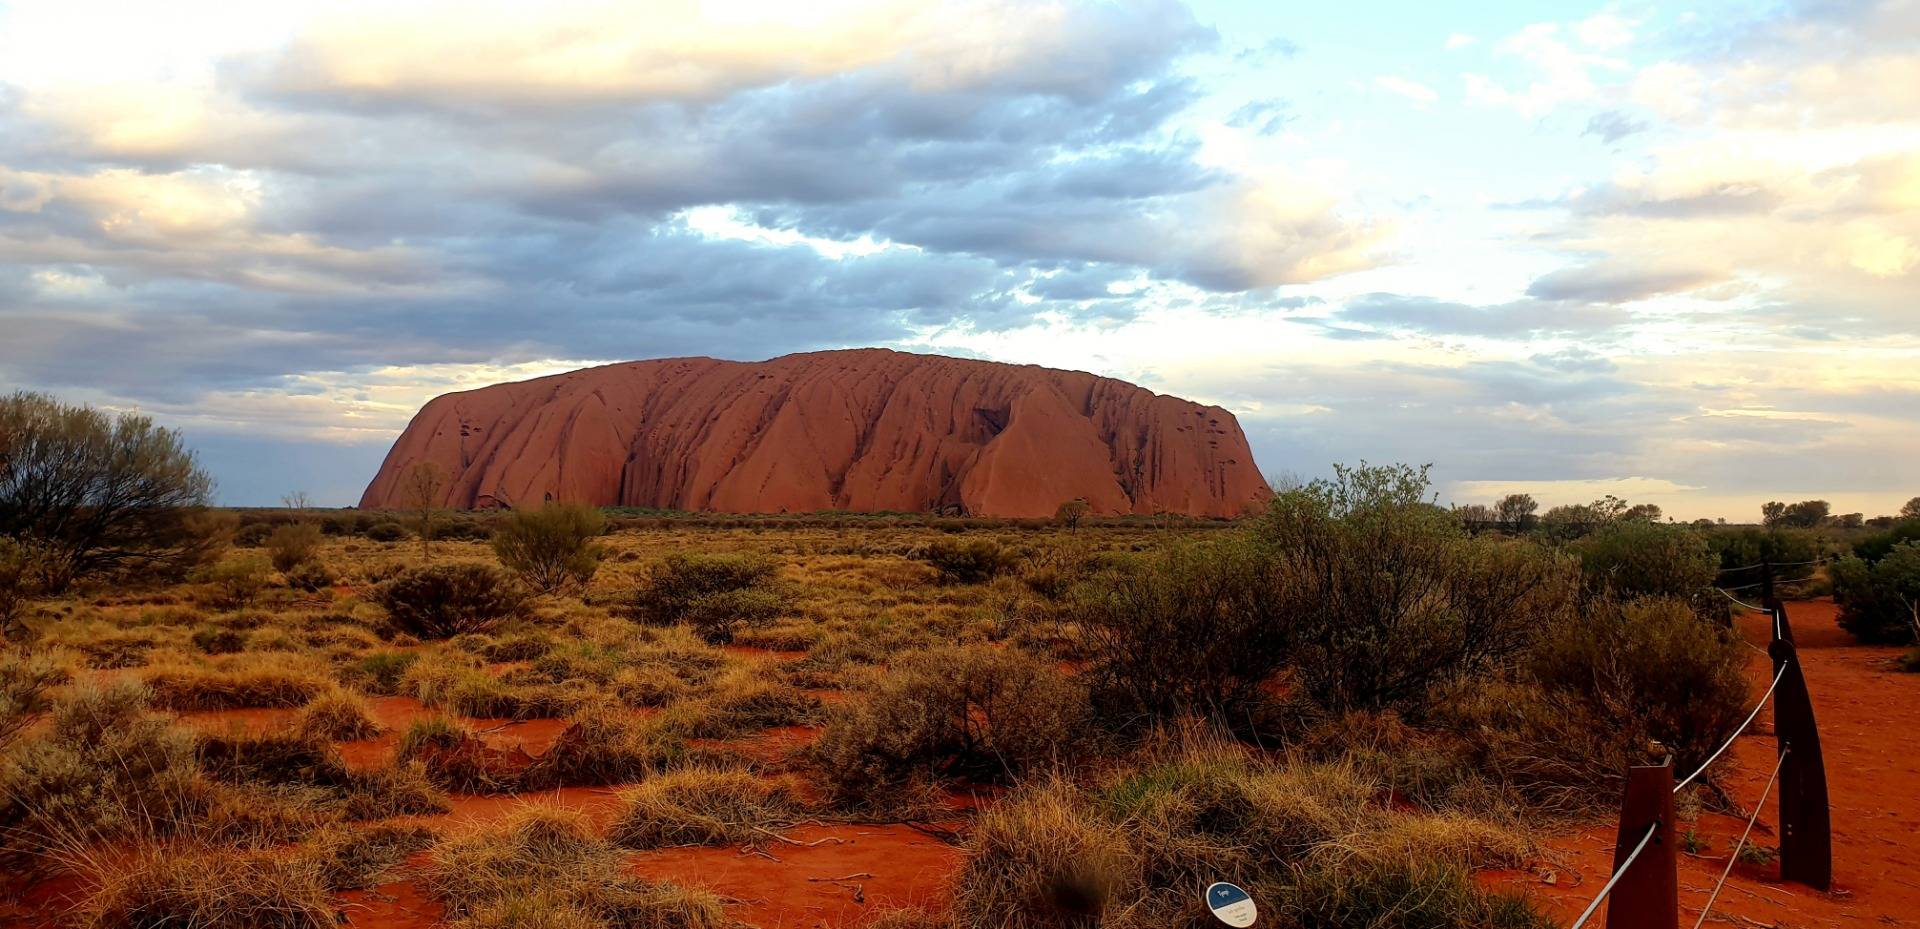 The sacred Uluru (Ayers Rock) and Kata Tjuta (The Olgas)